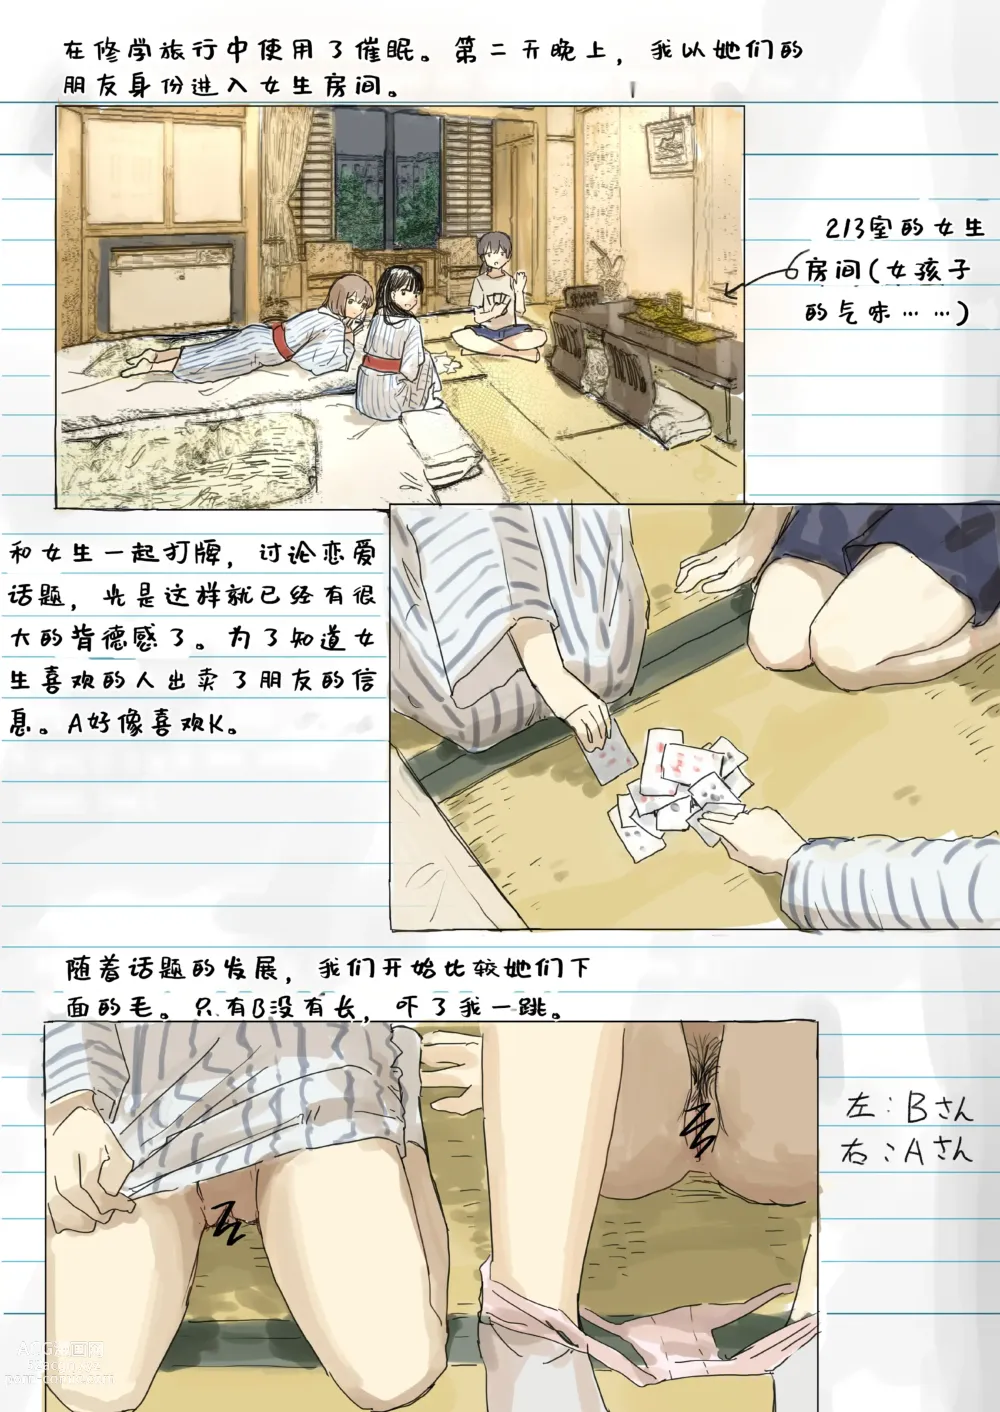 Page 16 of manga Joushiki Kaihen